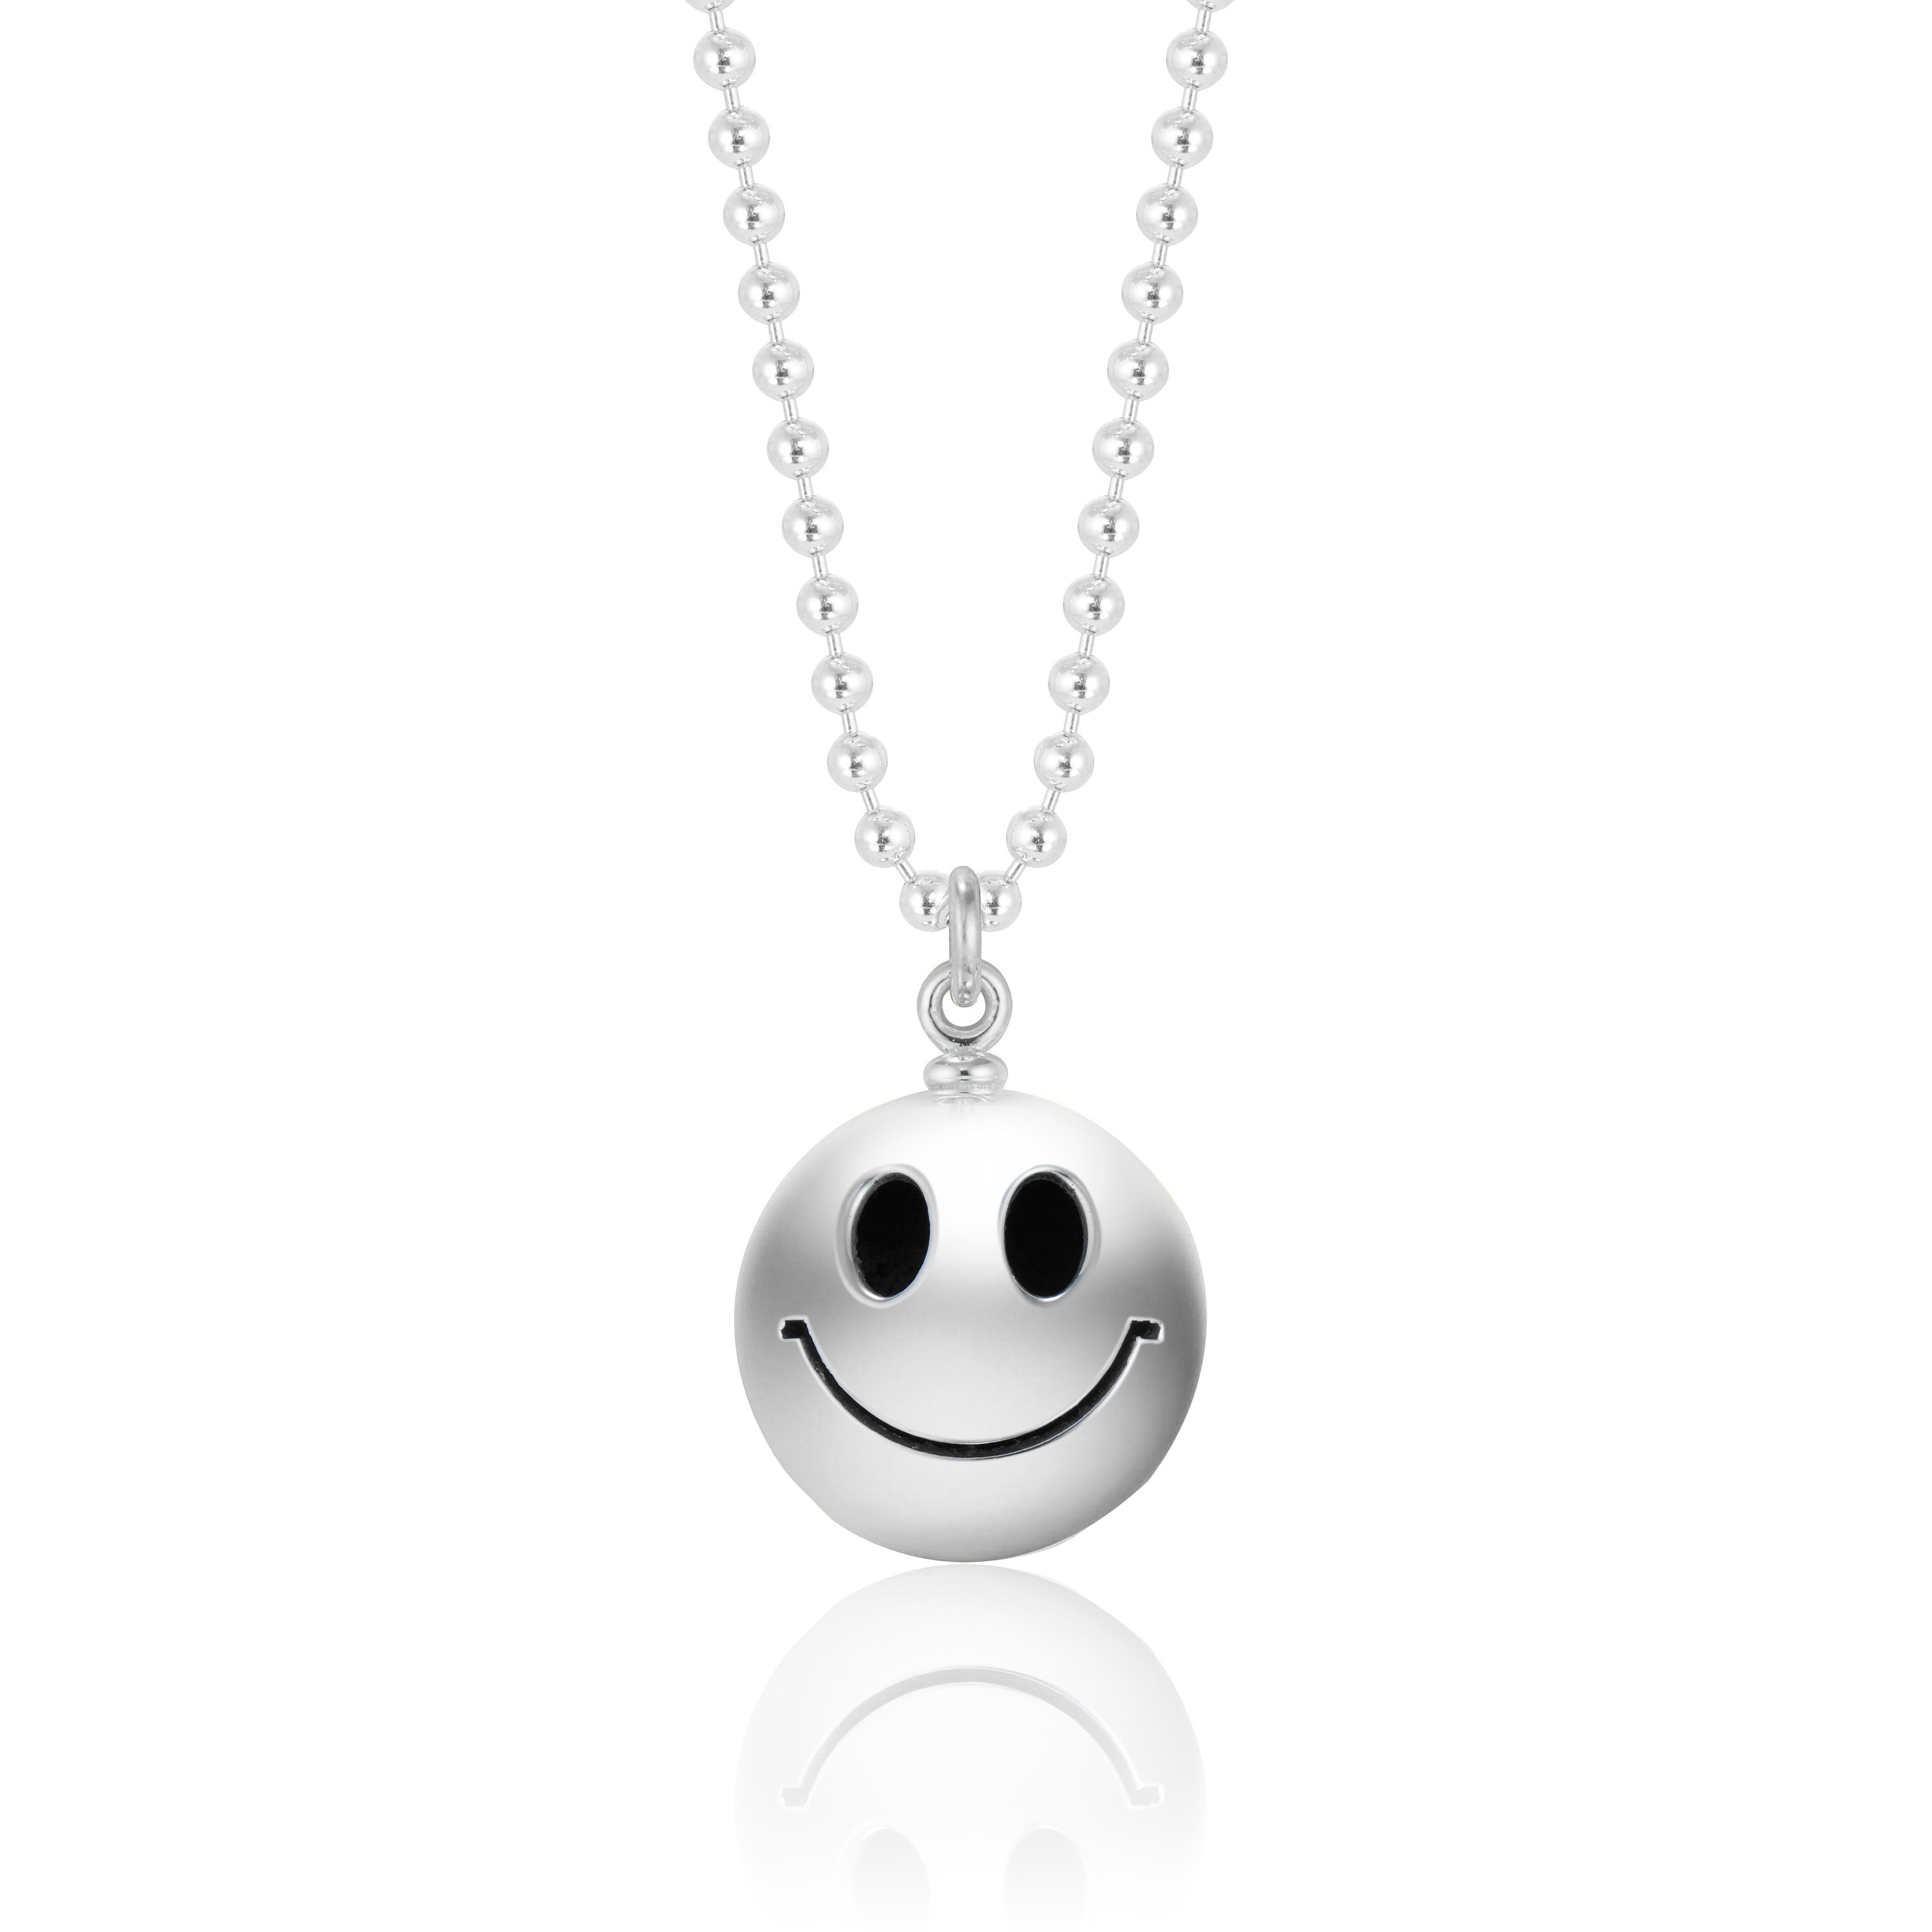 100pcs Enamel Smiley Face Charms Bulk Wholesale Charms Smiling